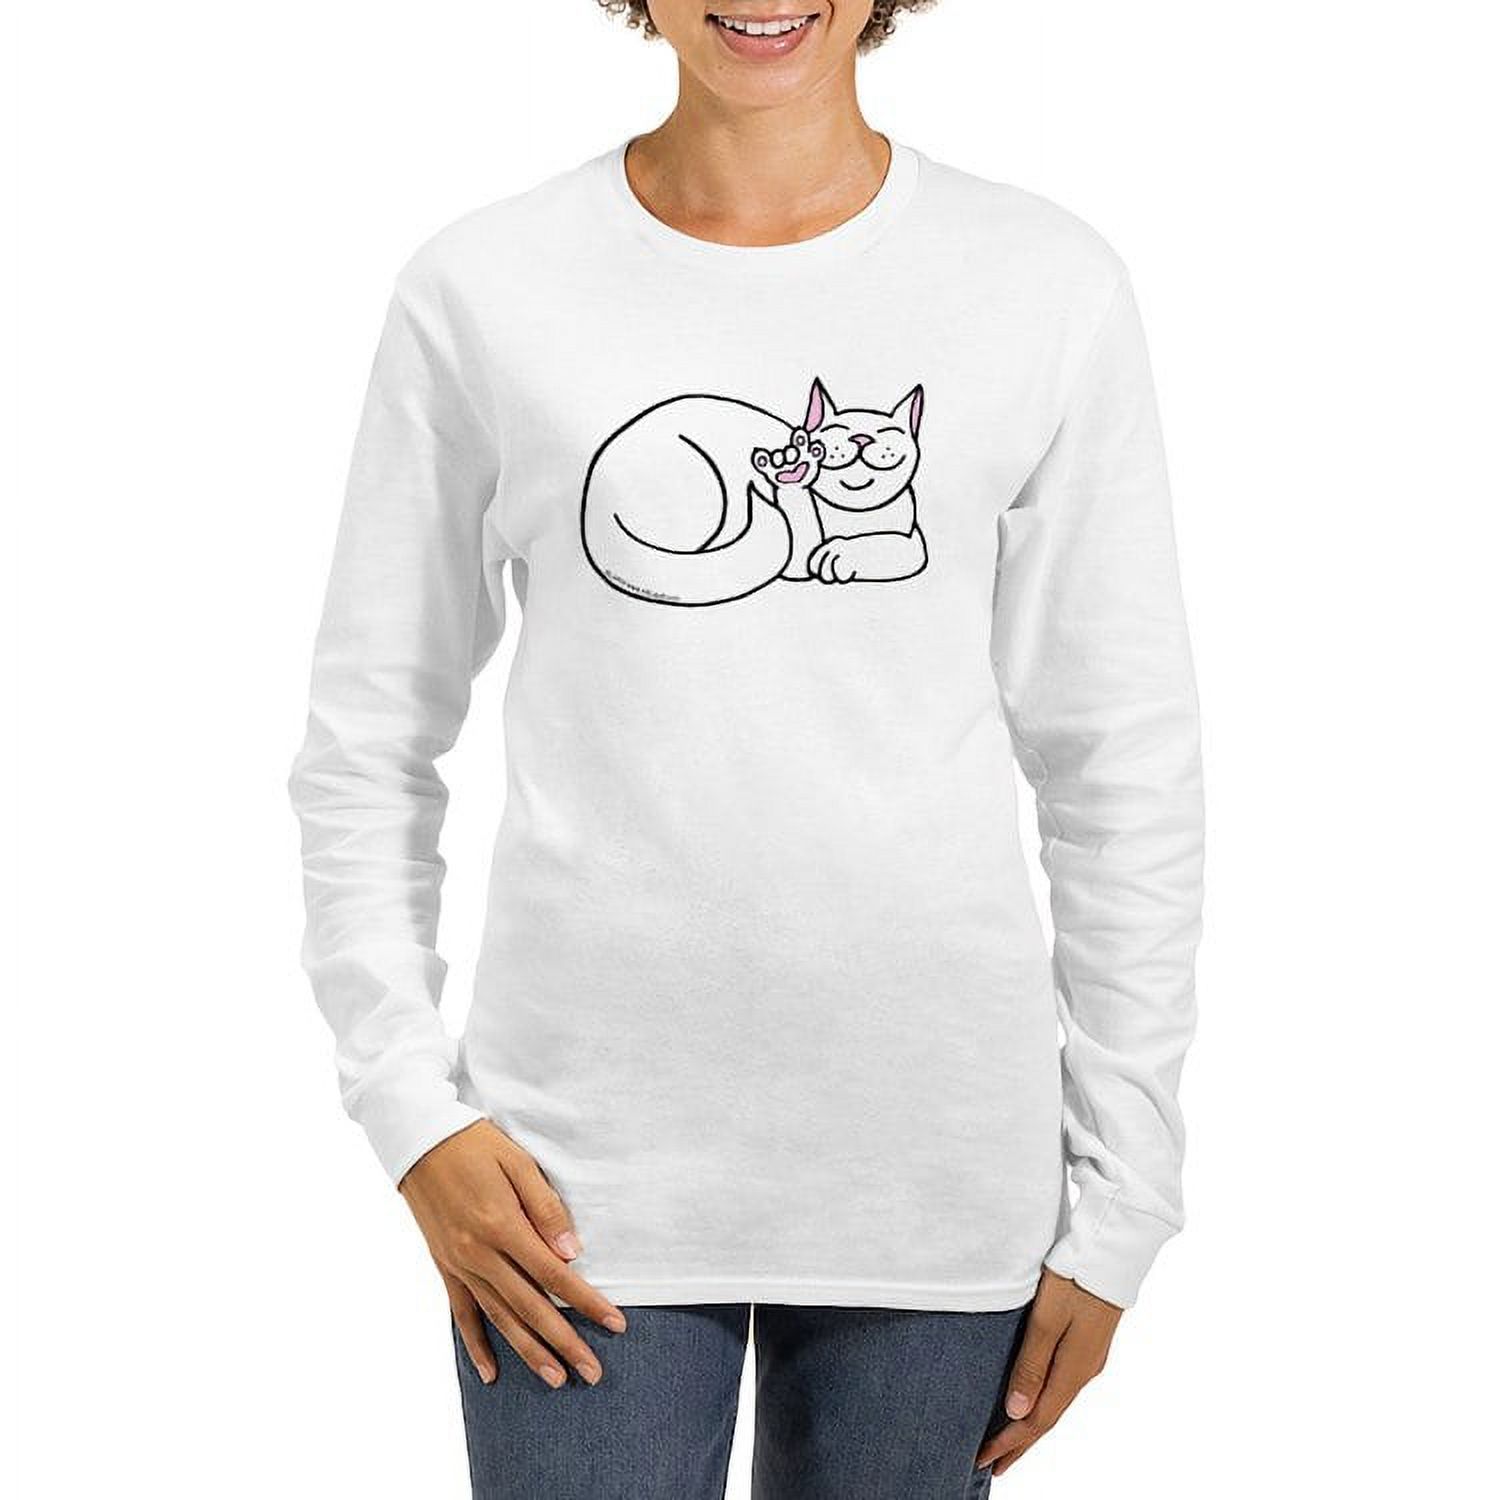 CafePress - White ASL Kitty Women's Long Sleeve T Shirt - Women's Long Sleeve Graphic Casual T-Shirt - image 1 of 4